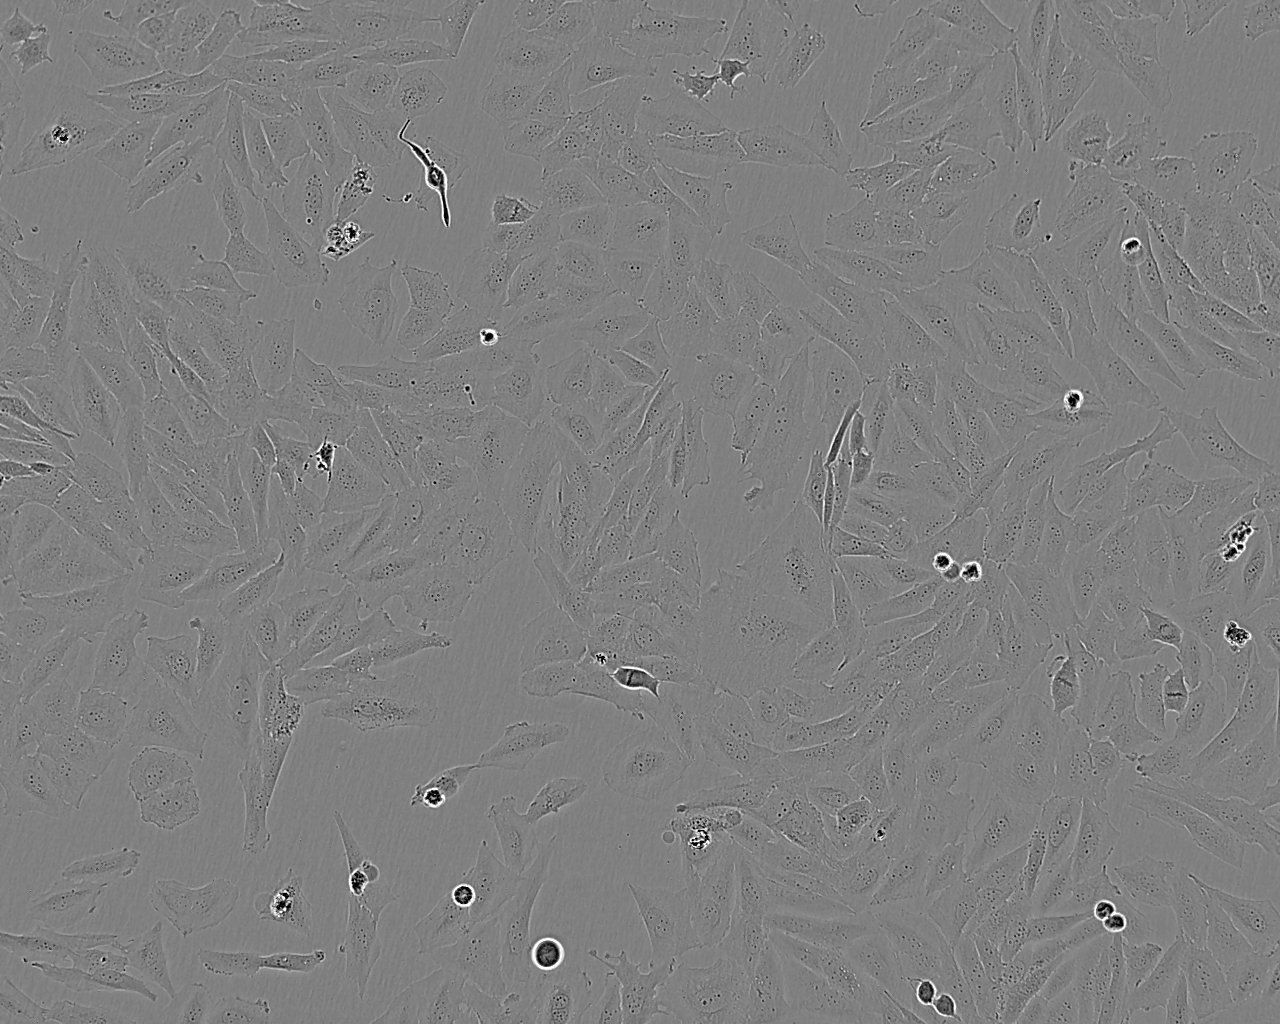 NCI-H226 Cells|人肺鳞癌细胞系